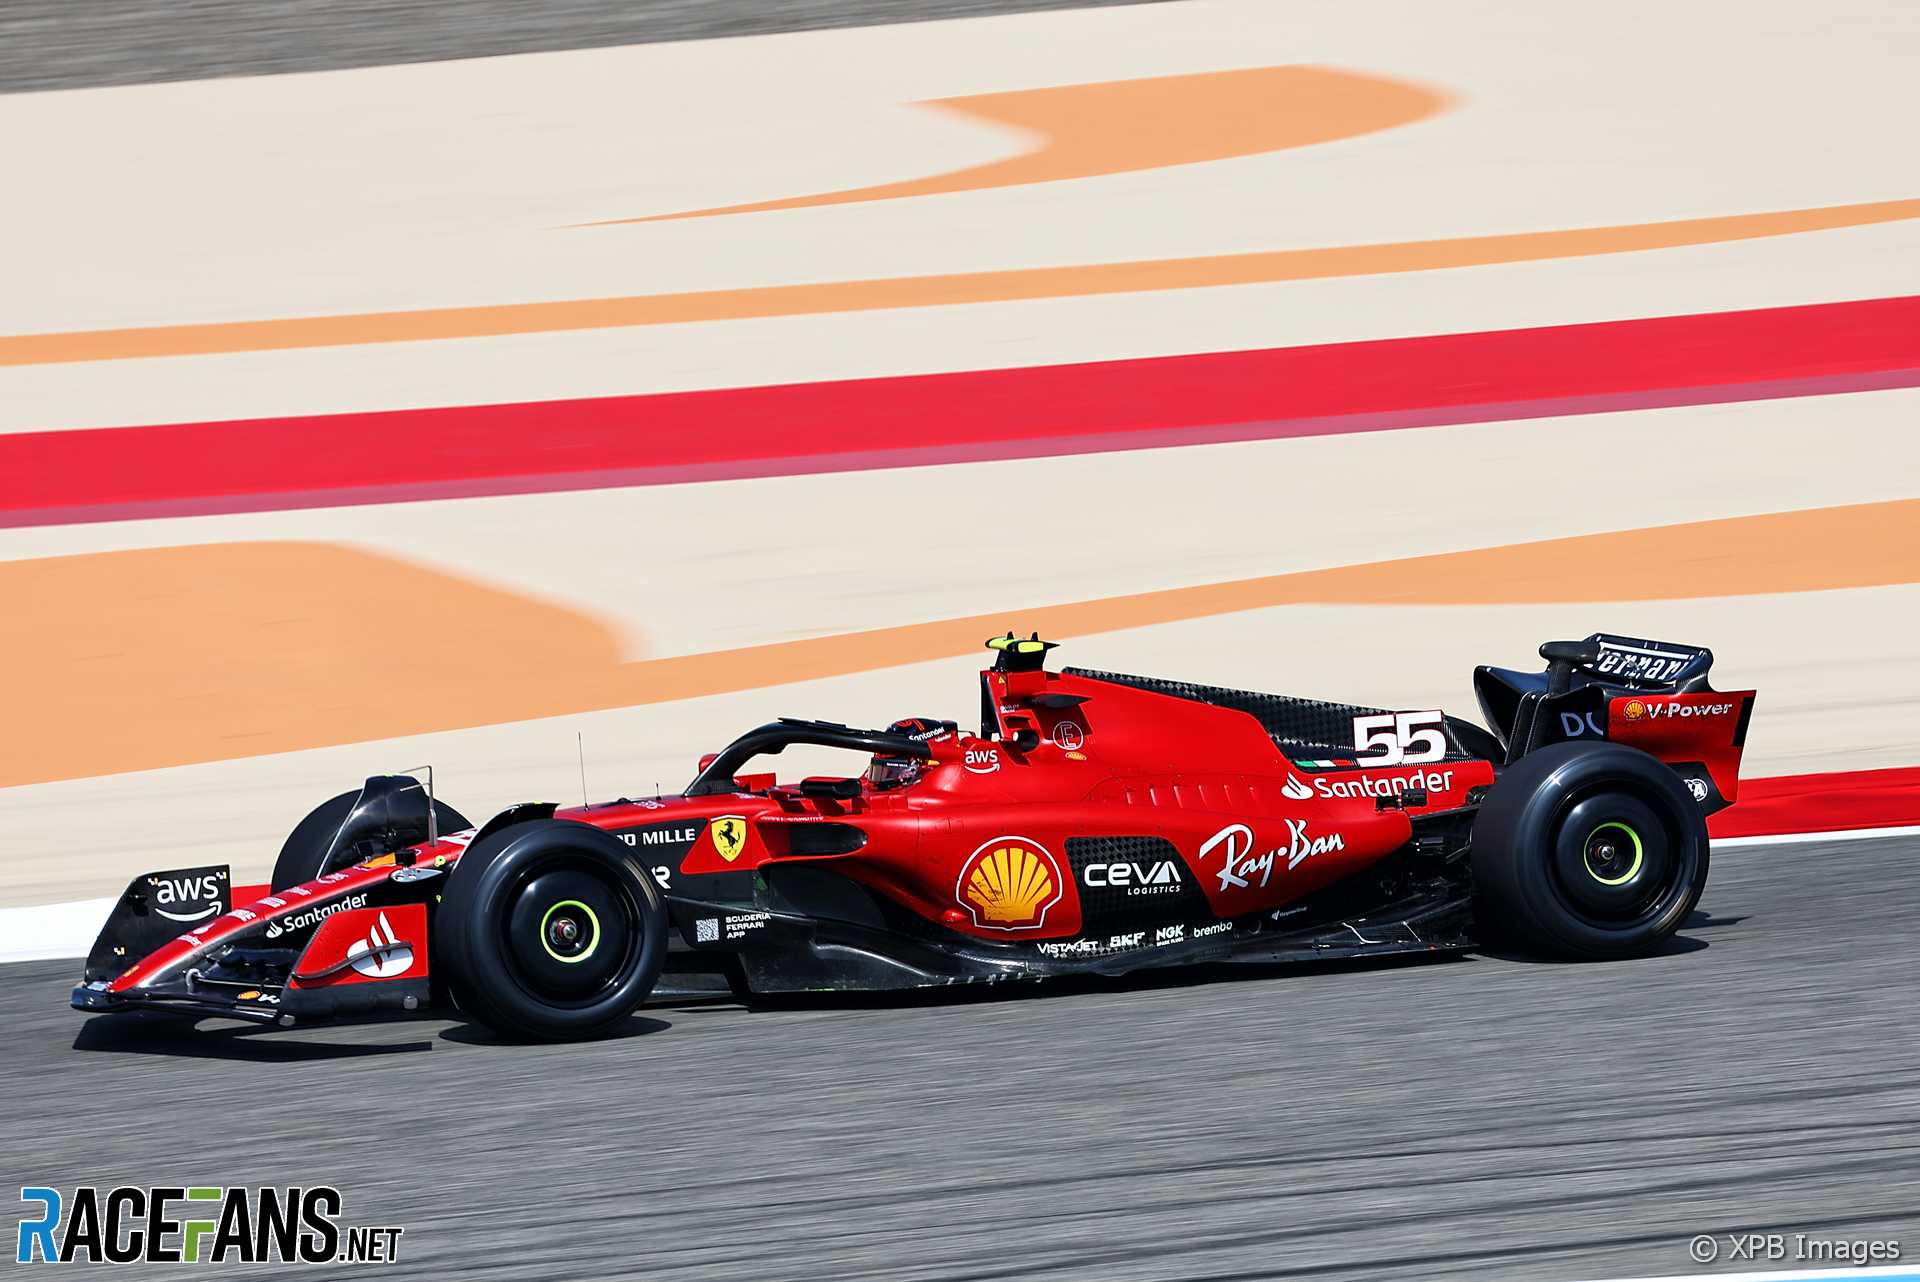 Obrázky: 2023 predsezónny testovací deň F1, druhý deň: Bahrajn · RaceFans